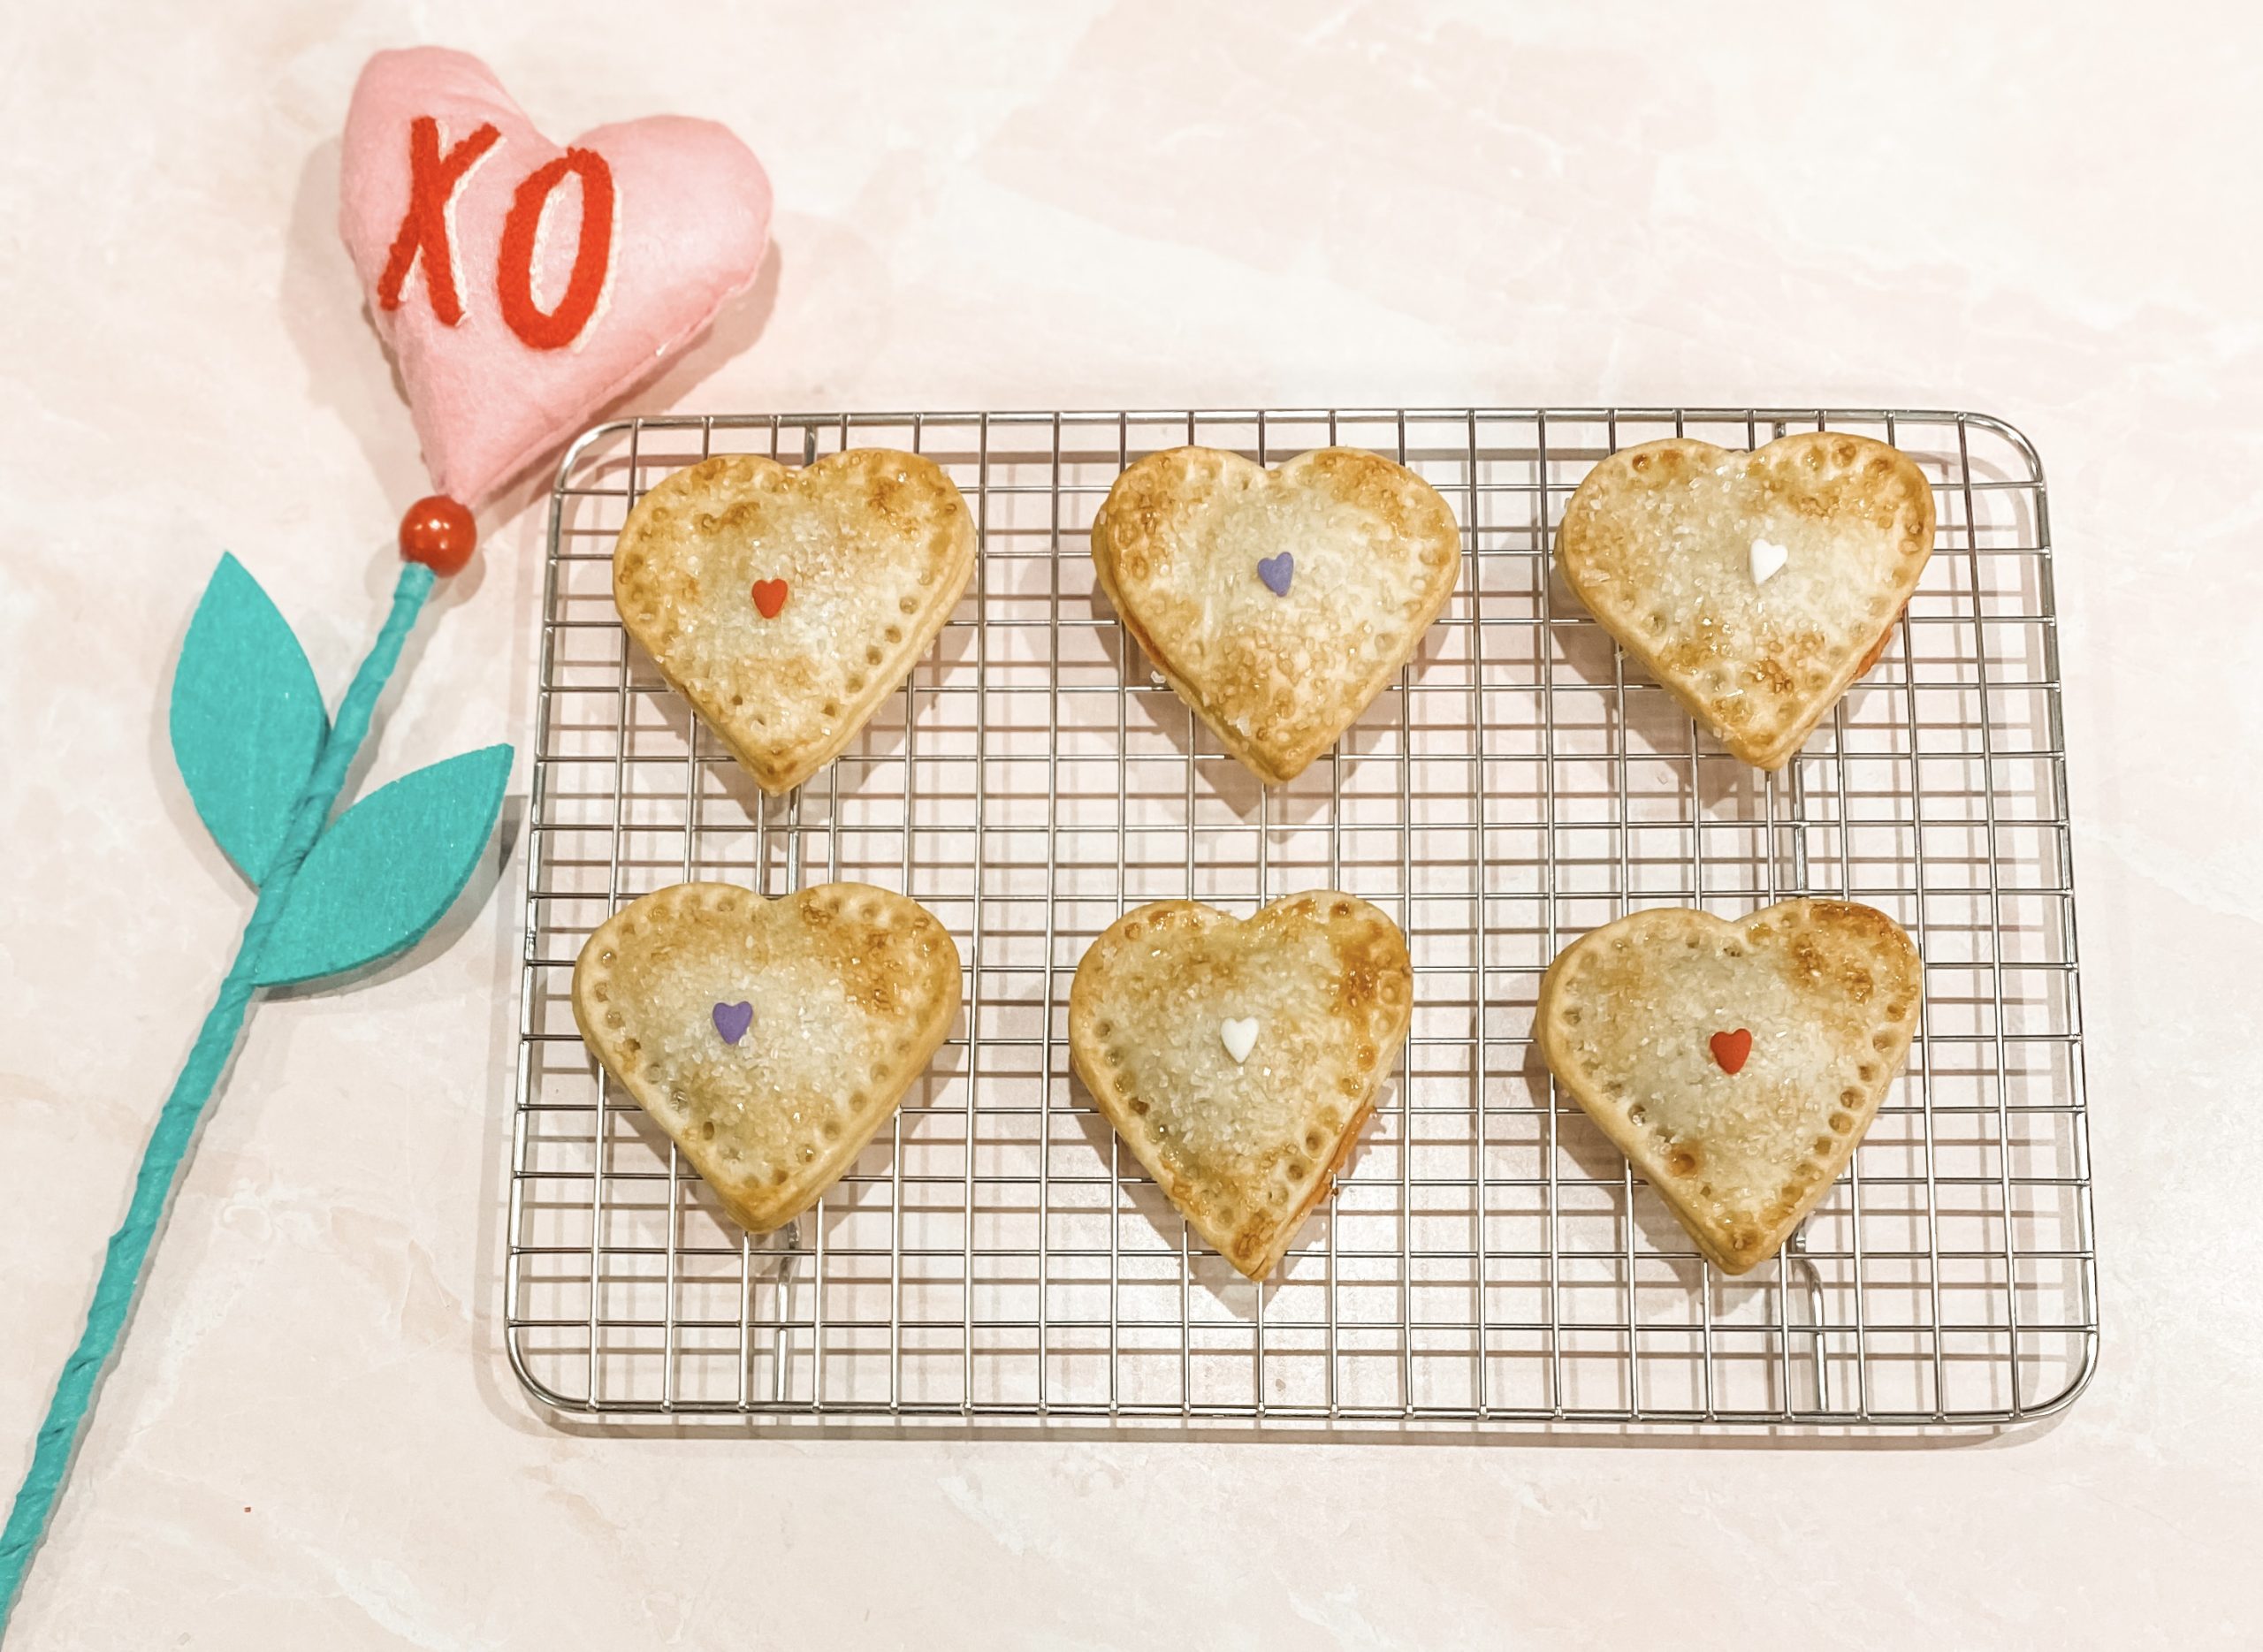 Heart Pie Crust Cutter, Valentine Baking, Valentine Gift for Baker,  Heart-shaped Cutter, 